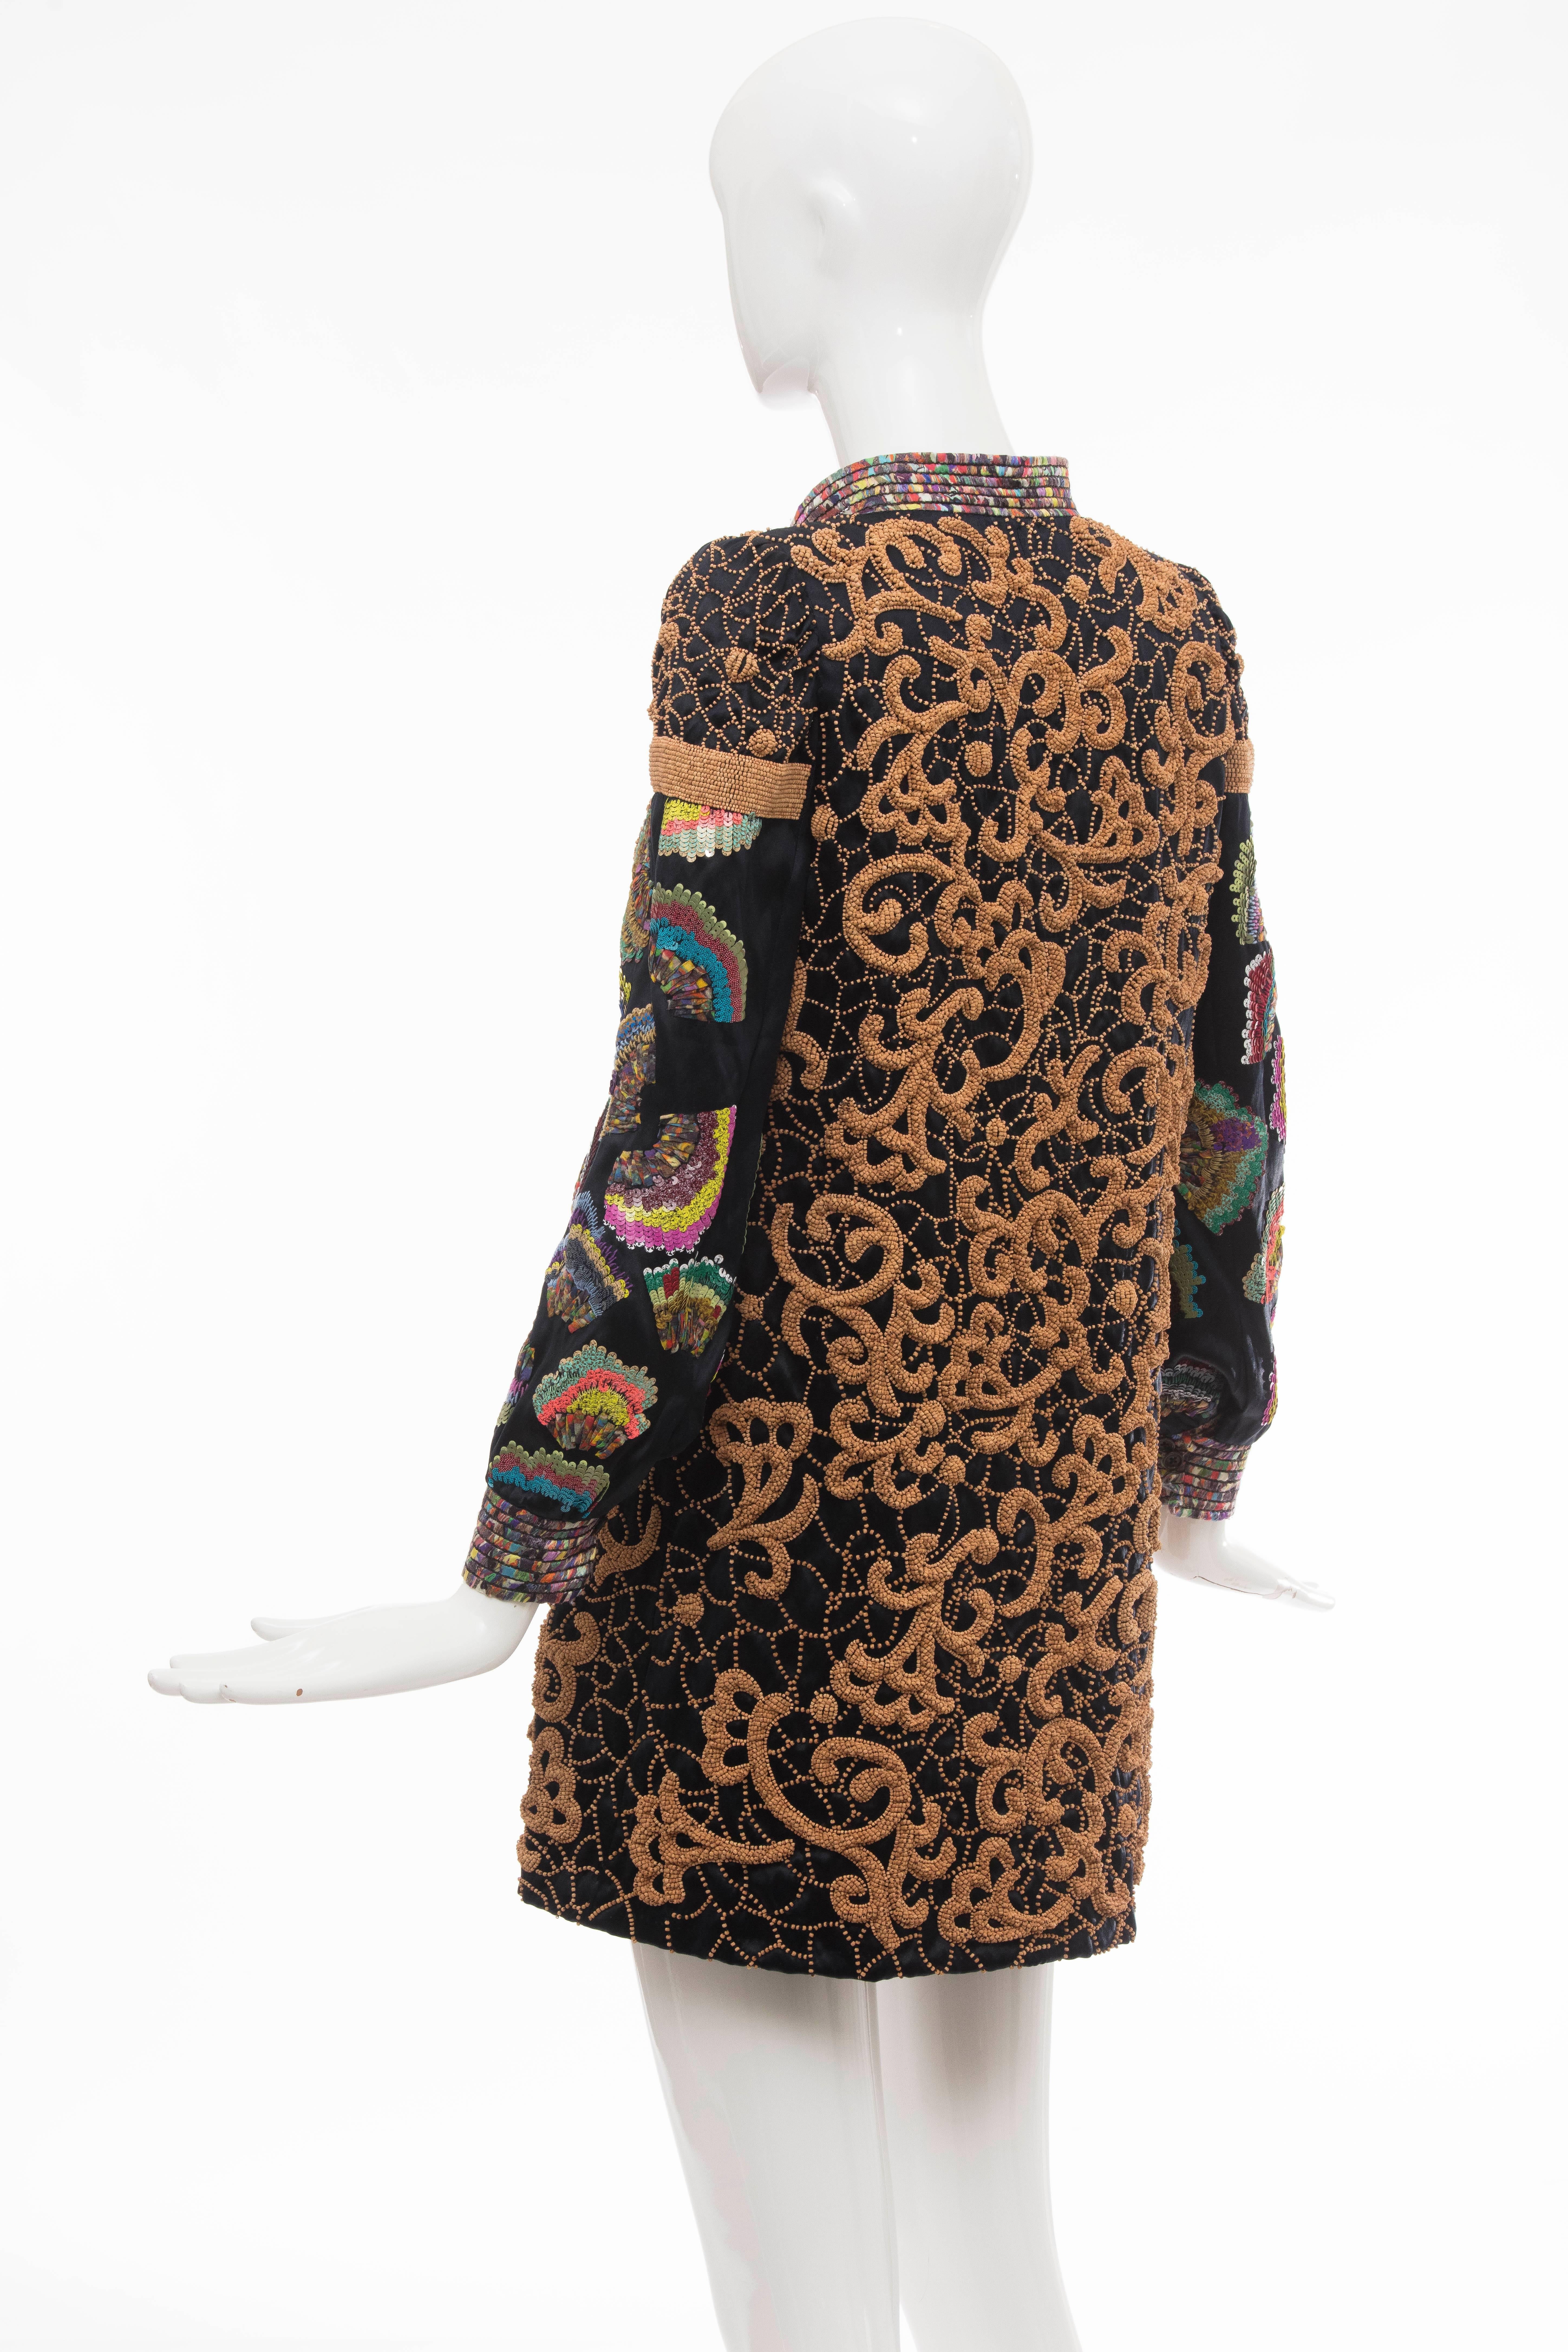 Dries Van Noten Black Silk Cotton Wood Beaded And Sequins Coat, Fall 2008 For Sale 5